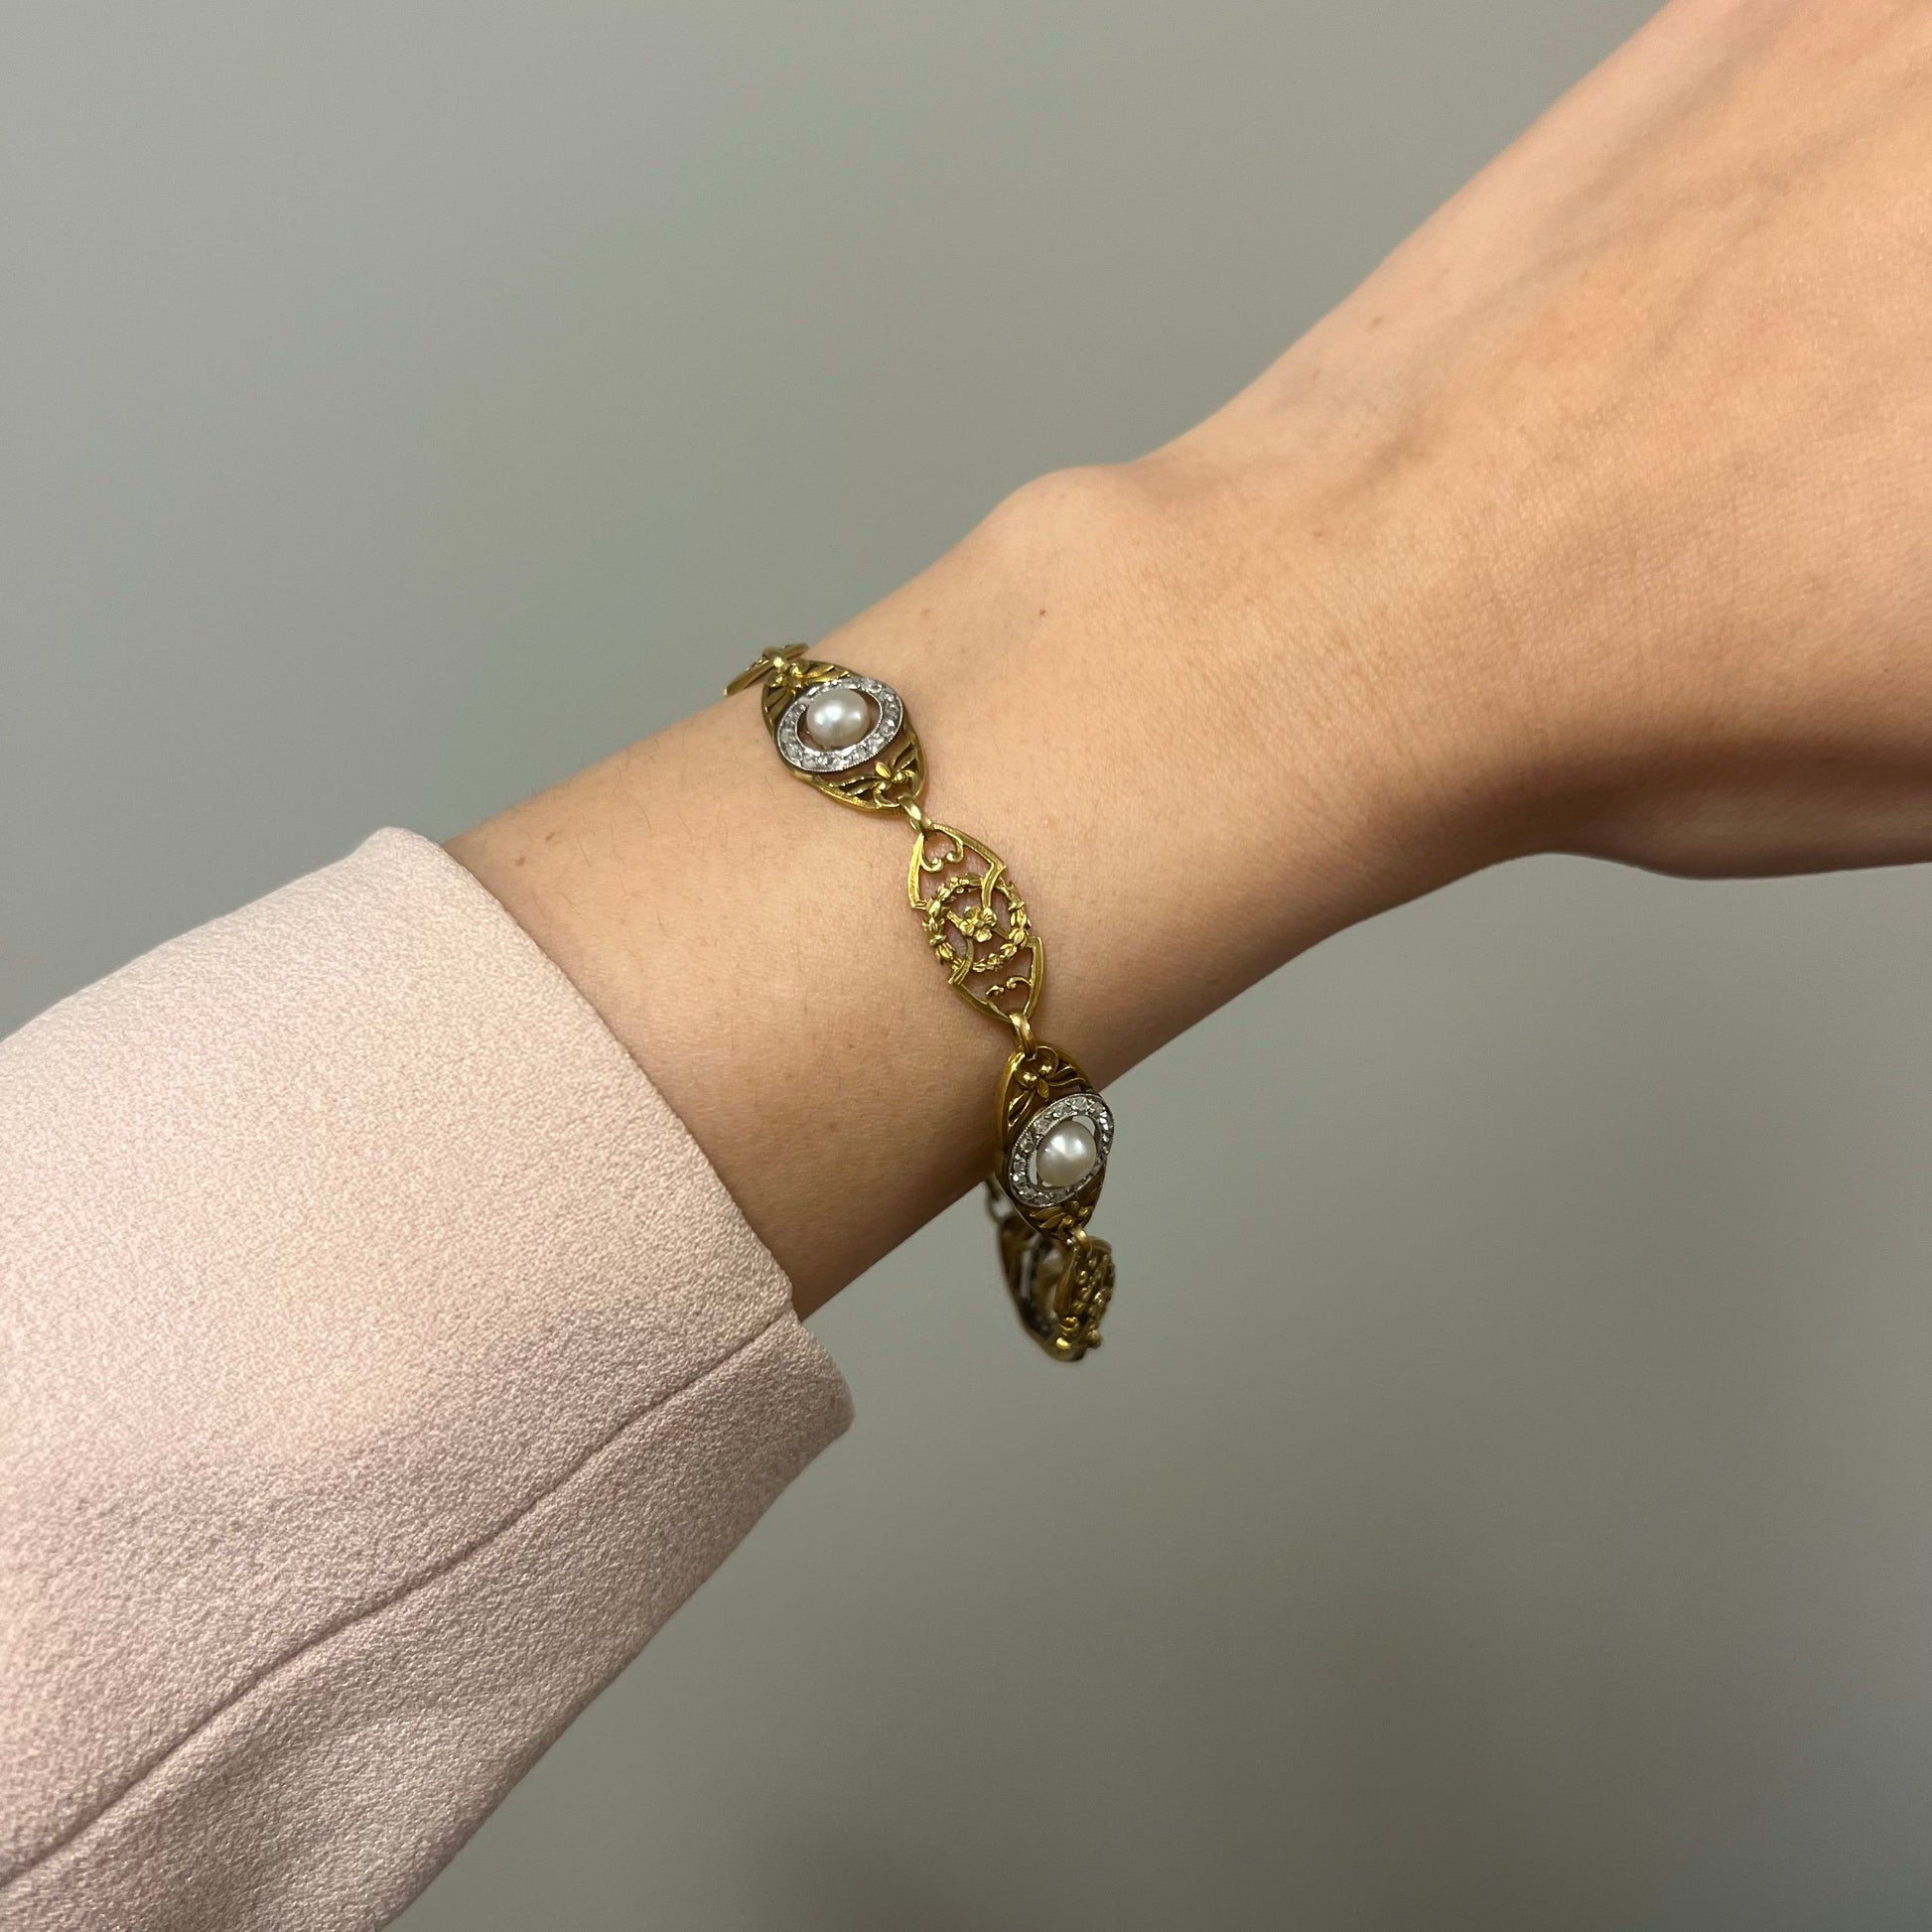 Art Nouveau 18KT Yellow Gold Diamond Natural Pearl Bracelet worn on wrist